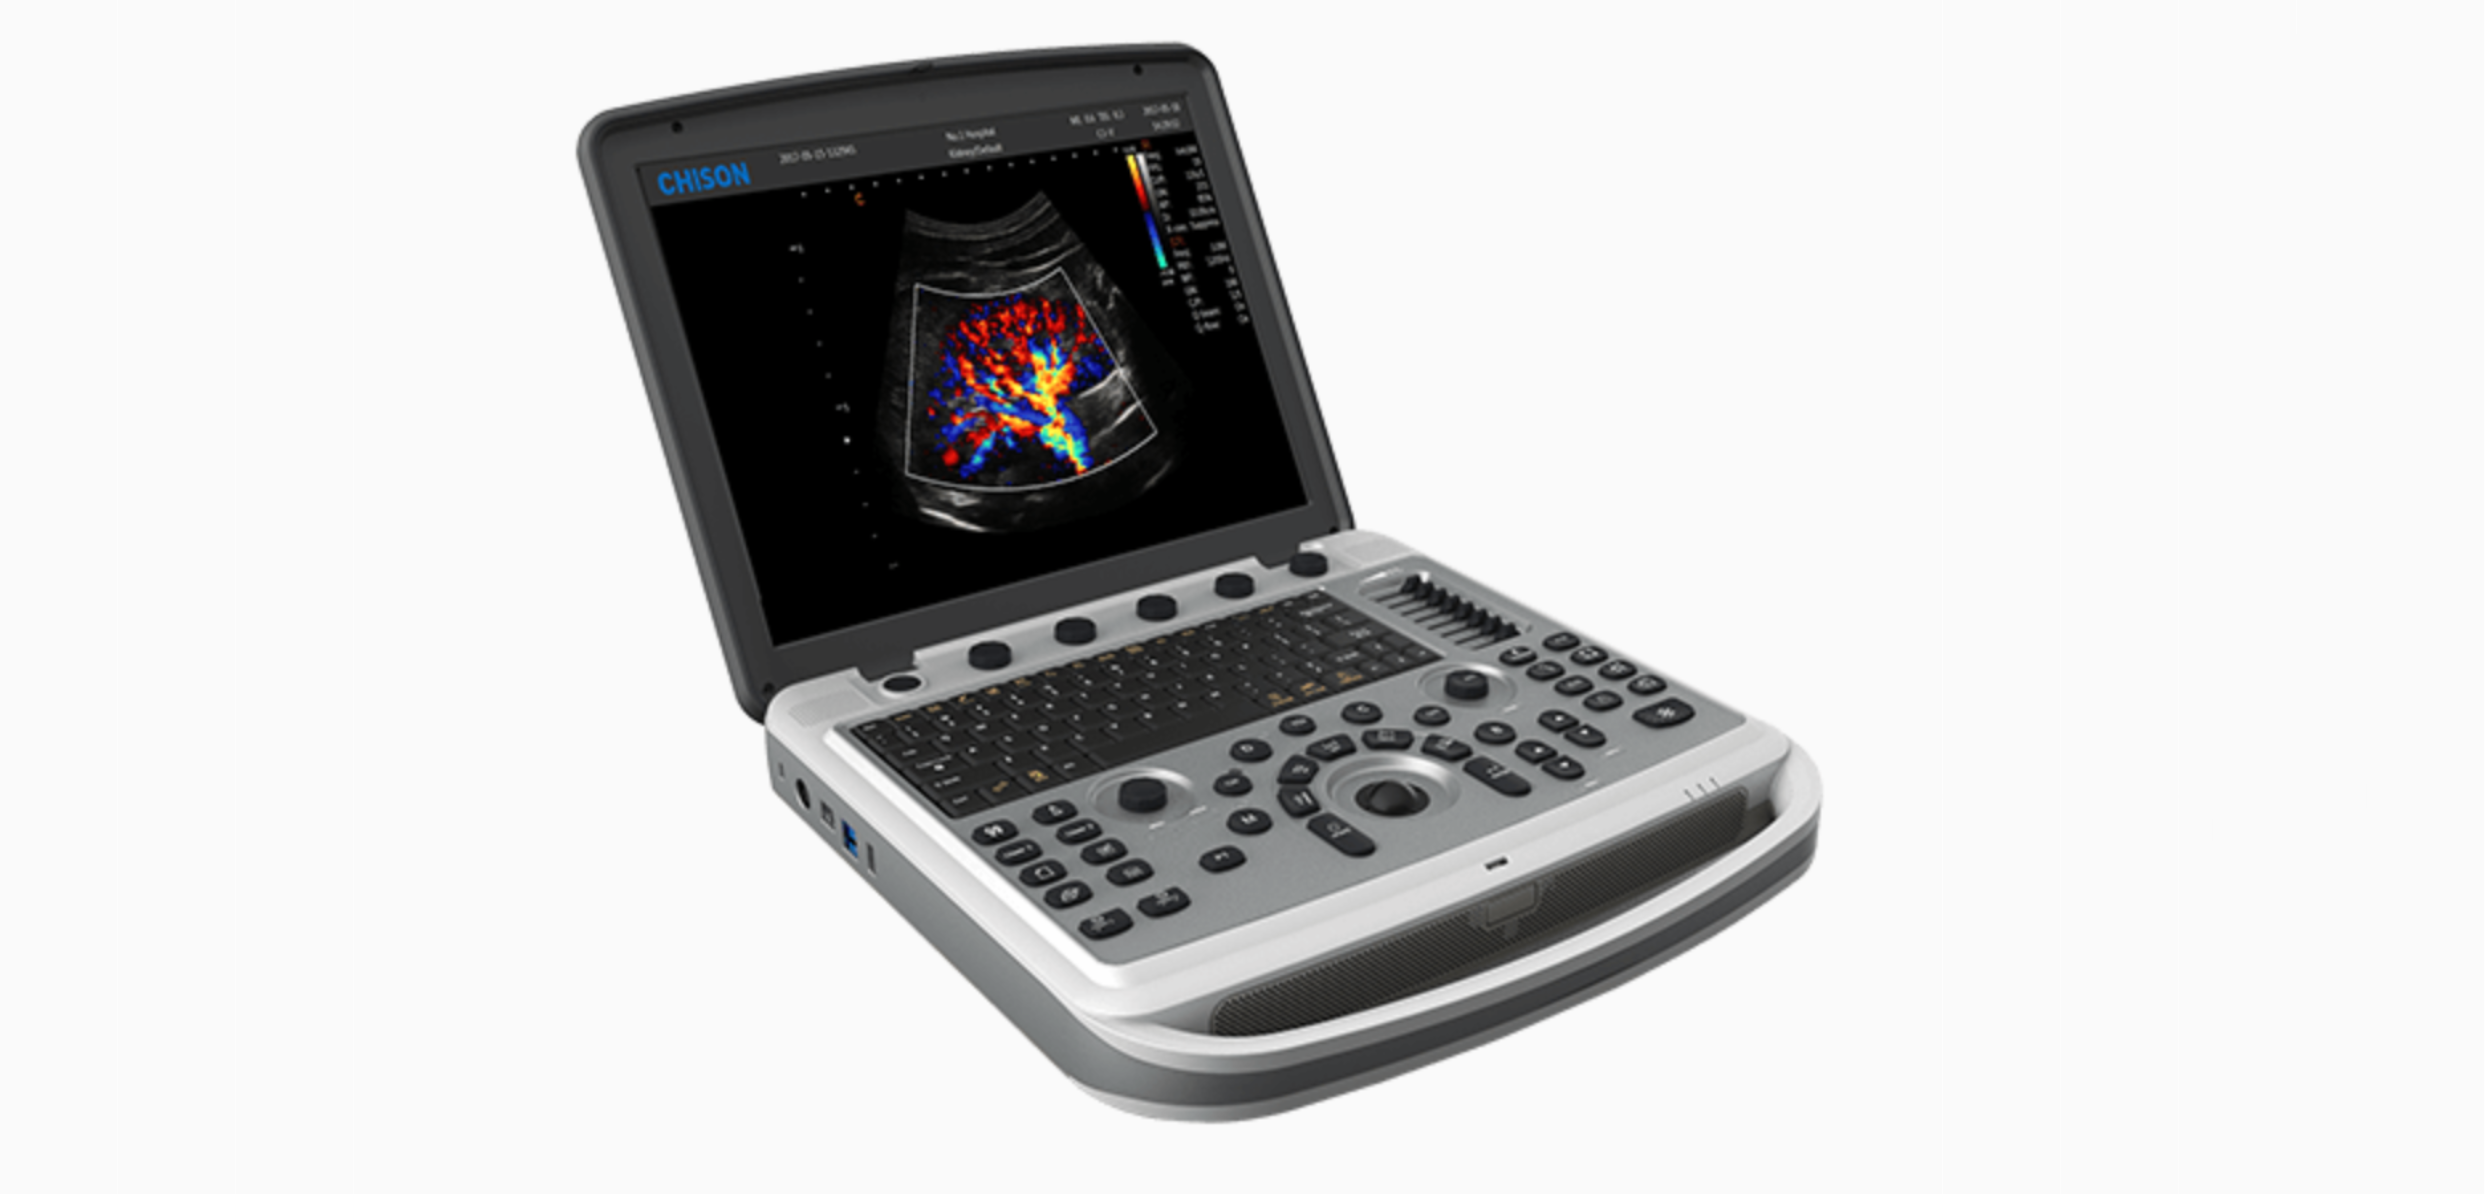 CHISON SonoBook 6 Portable Ultrasound